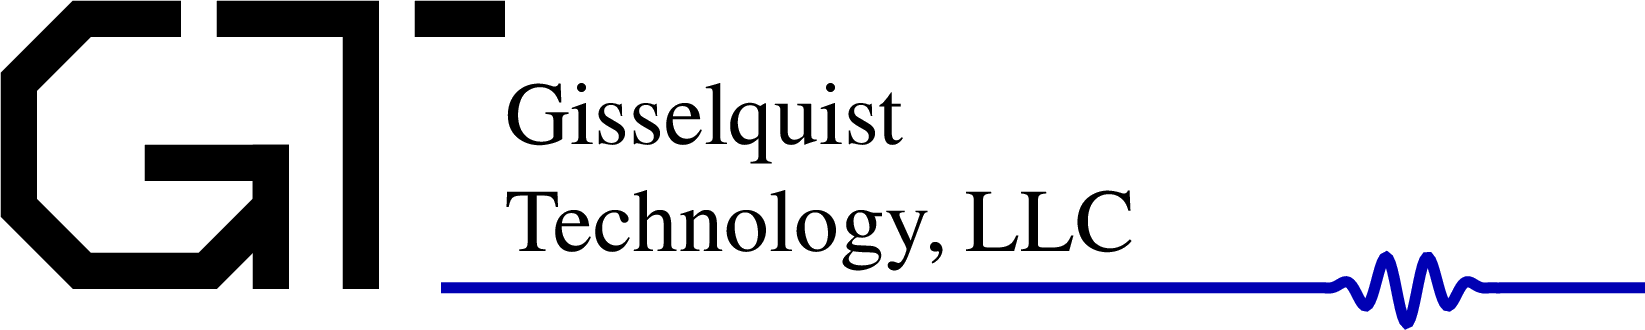 Gisselquist Technology, LLC